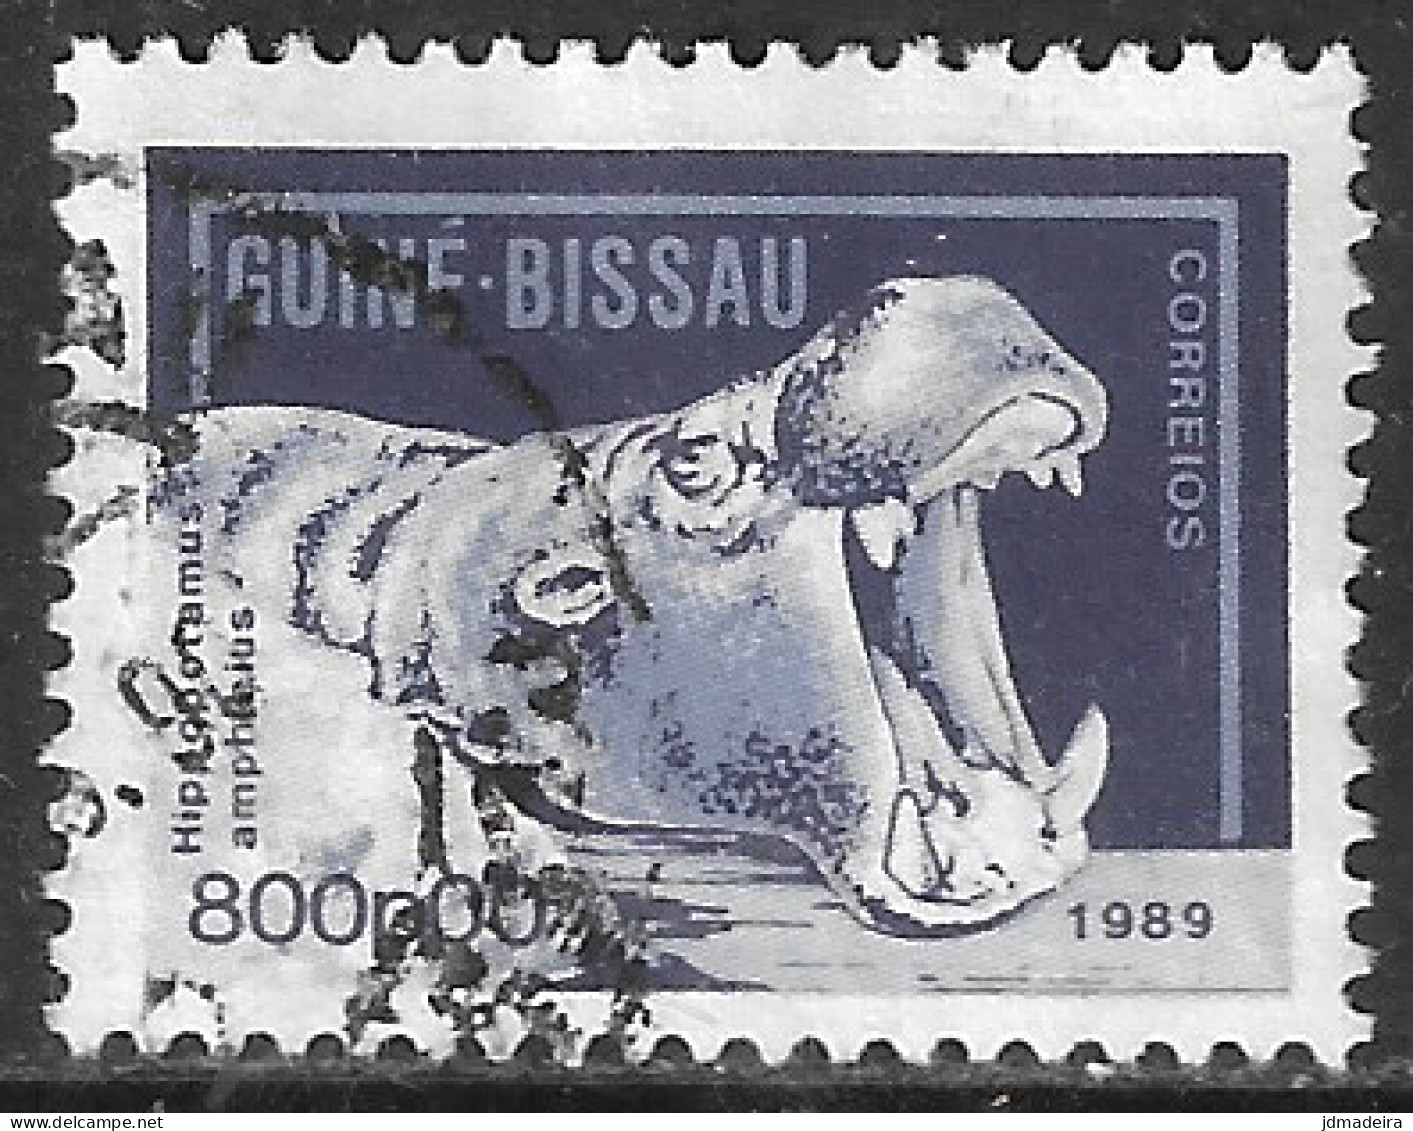 GUINE BISSAU – 1989 Animals 800P00 Used Stamp - Guinea-Bissau